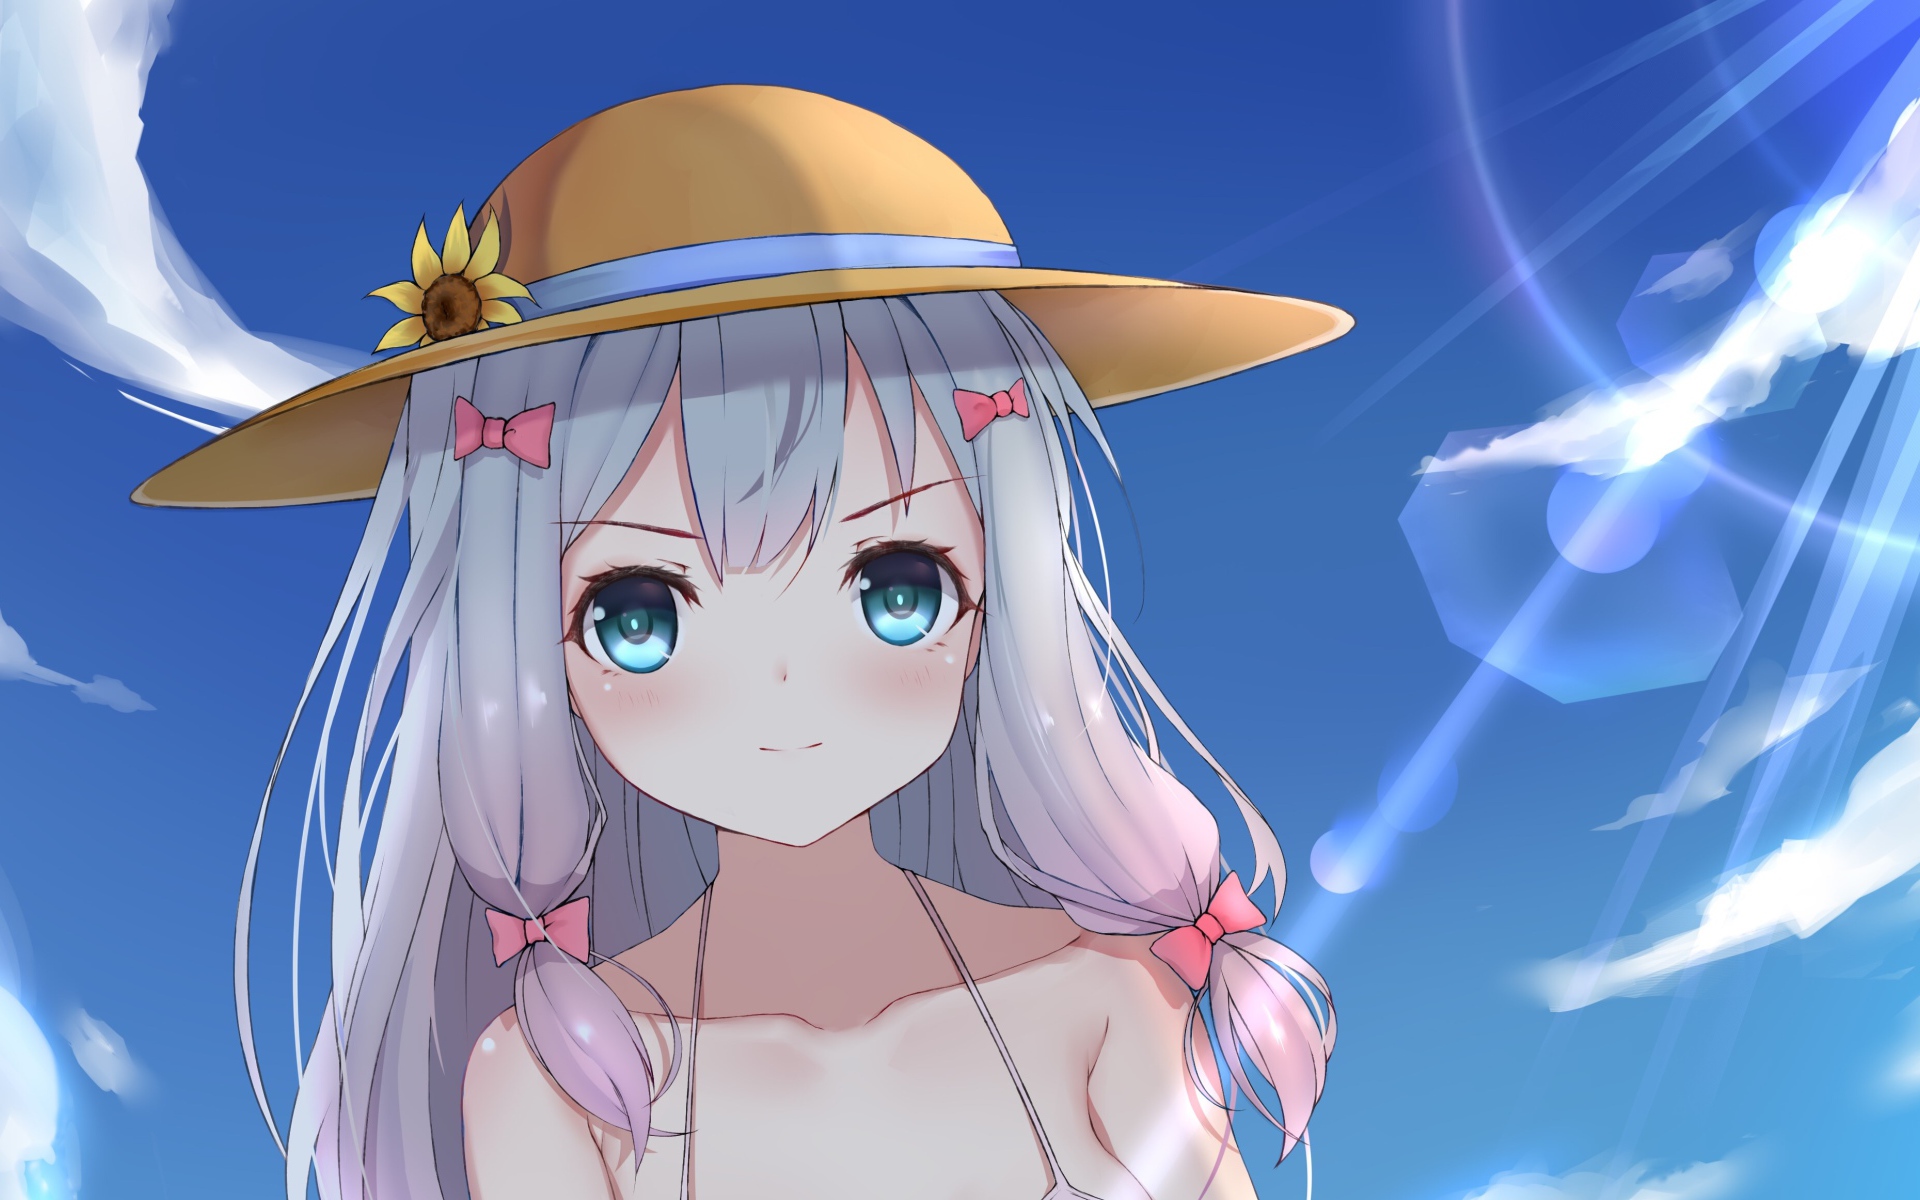 Eromanga-sensei anime girl in a hat against the sky